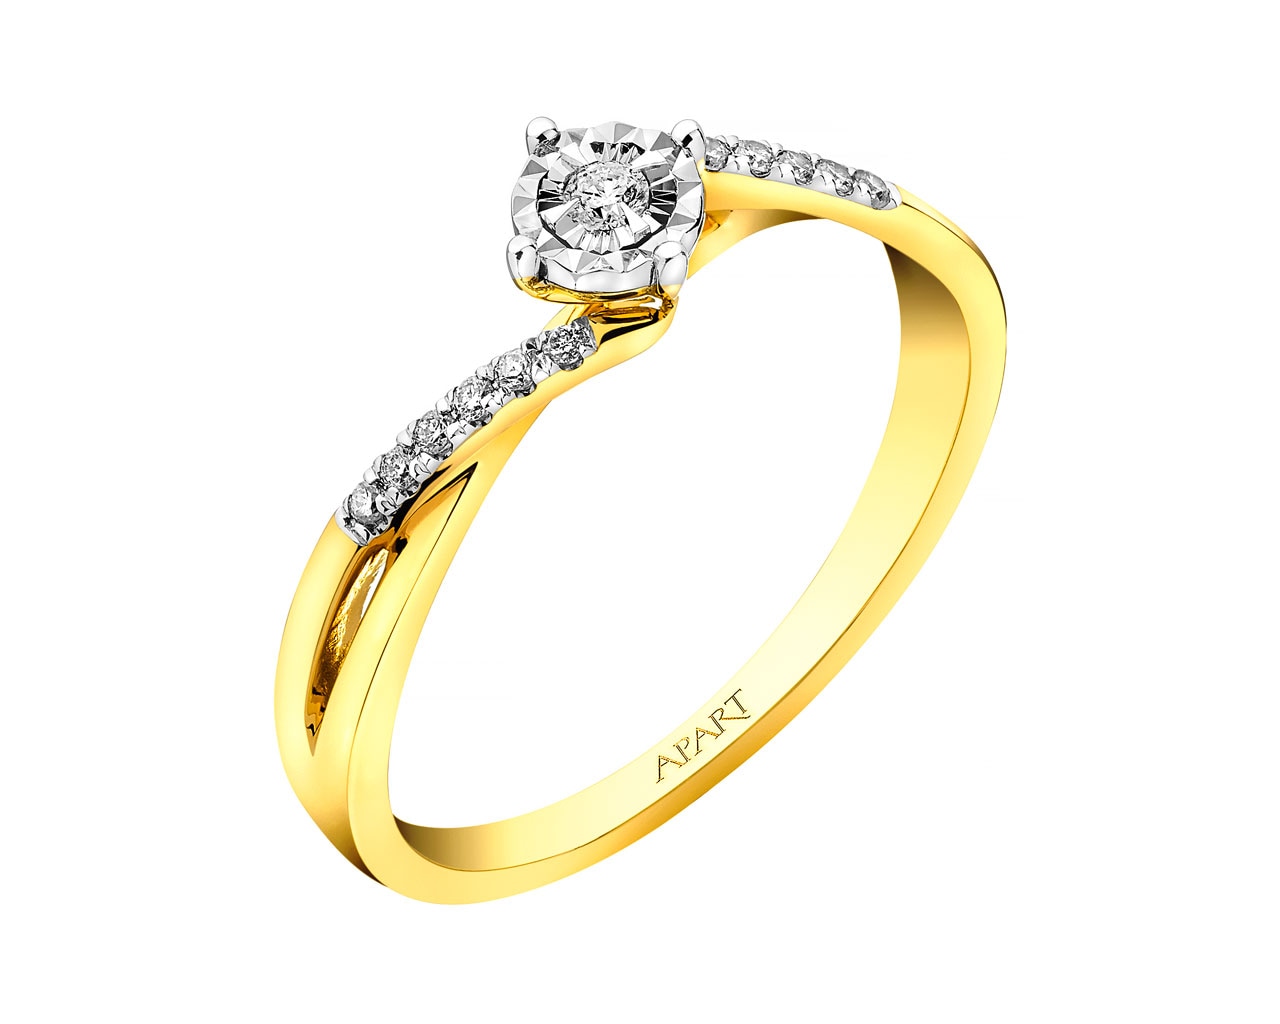 Prsten ze žlutého a bílého zlata s brilianty 0,08 ct - ryzost 585